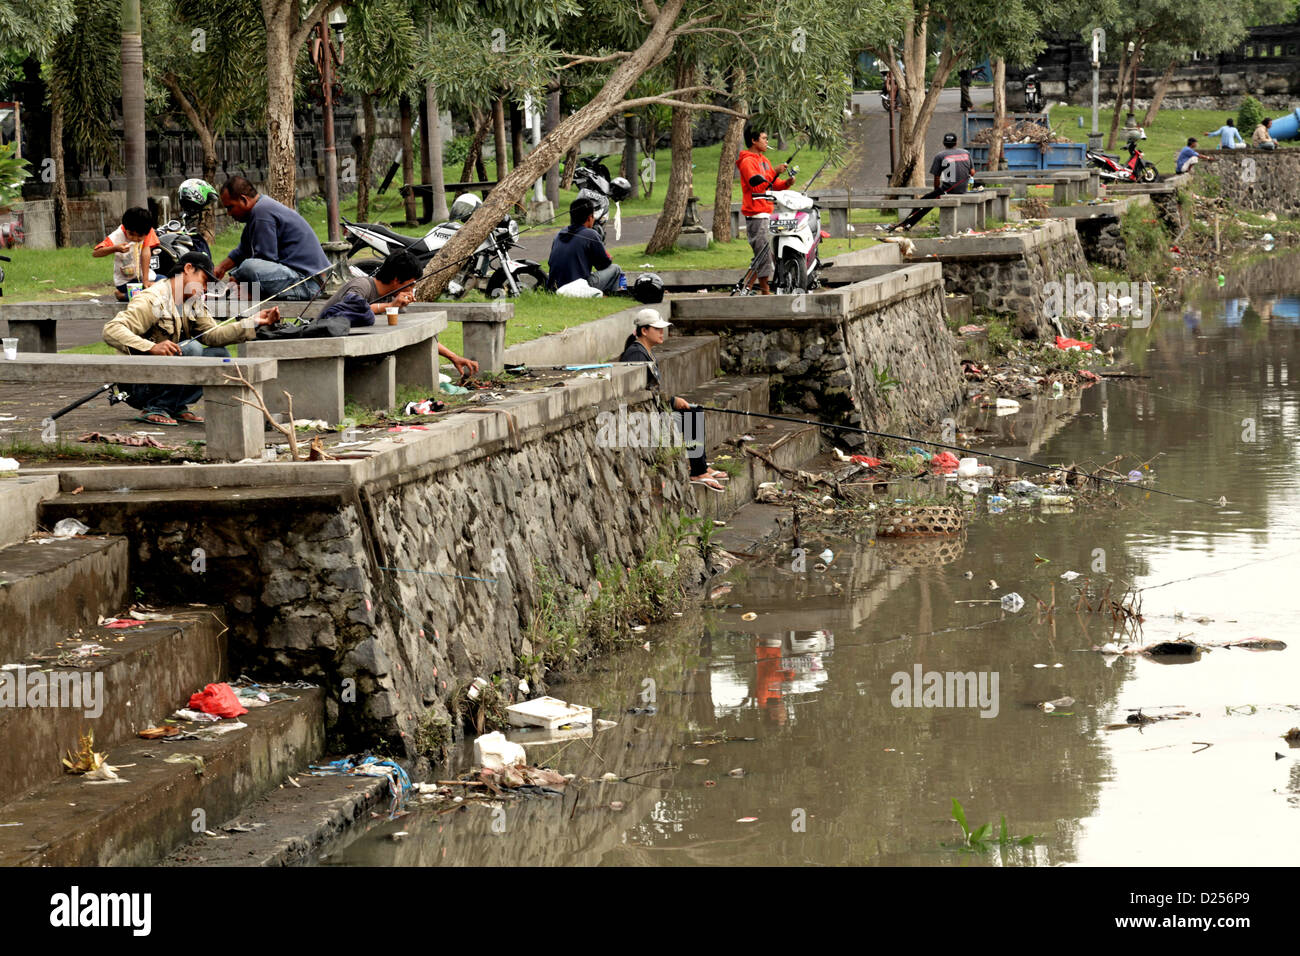 Les ordures de Bali : de la rivière à la mer, les gens de la pêche dans l'eau polluée. Banque D'Images